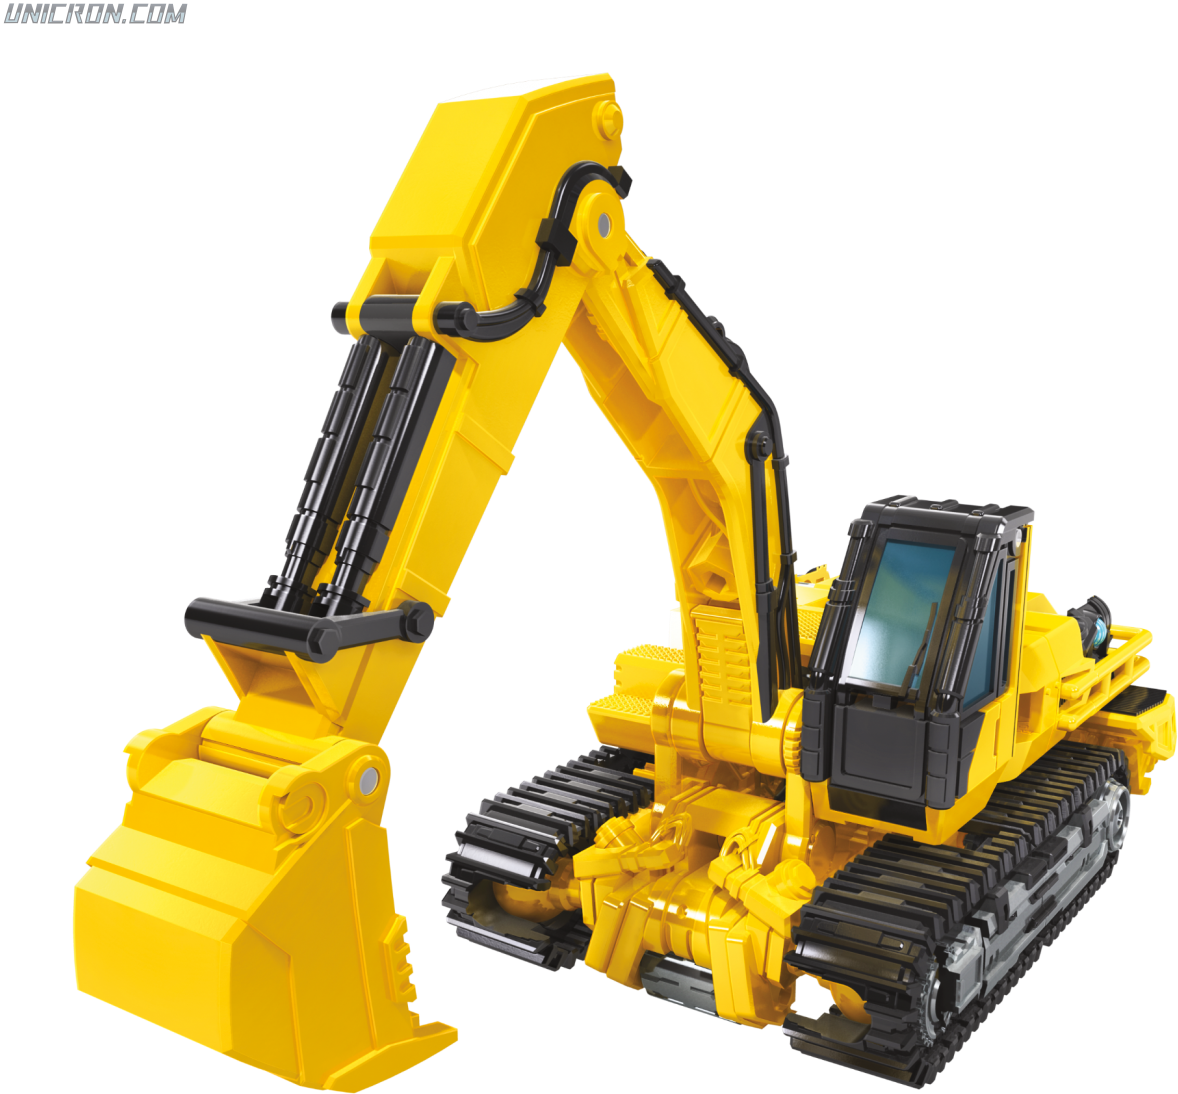 A Yellow Toy Excavator